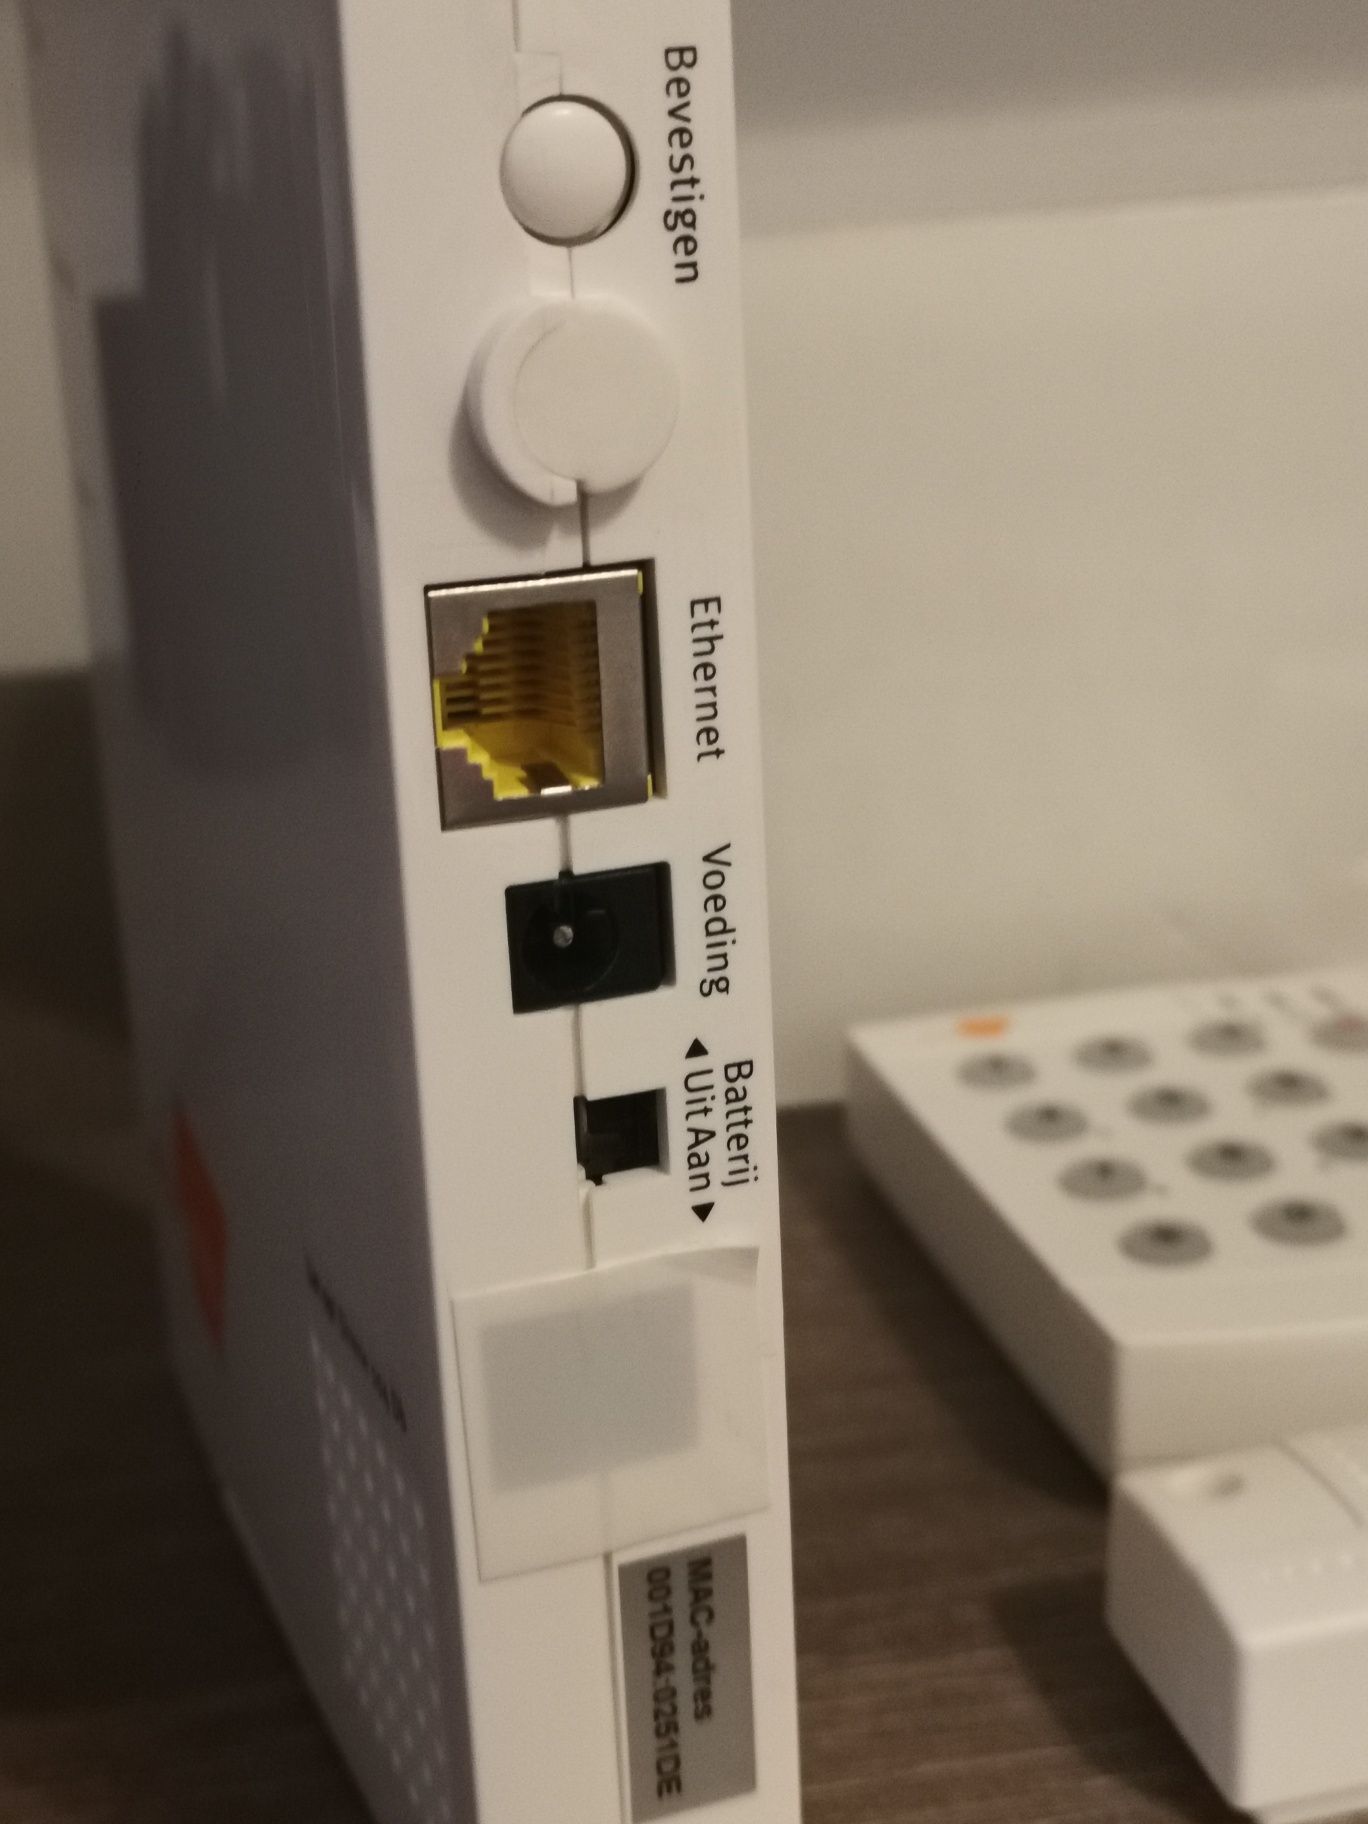 Kit centrala alarma wifi WV-1716, nouă